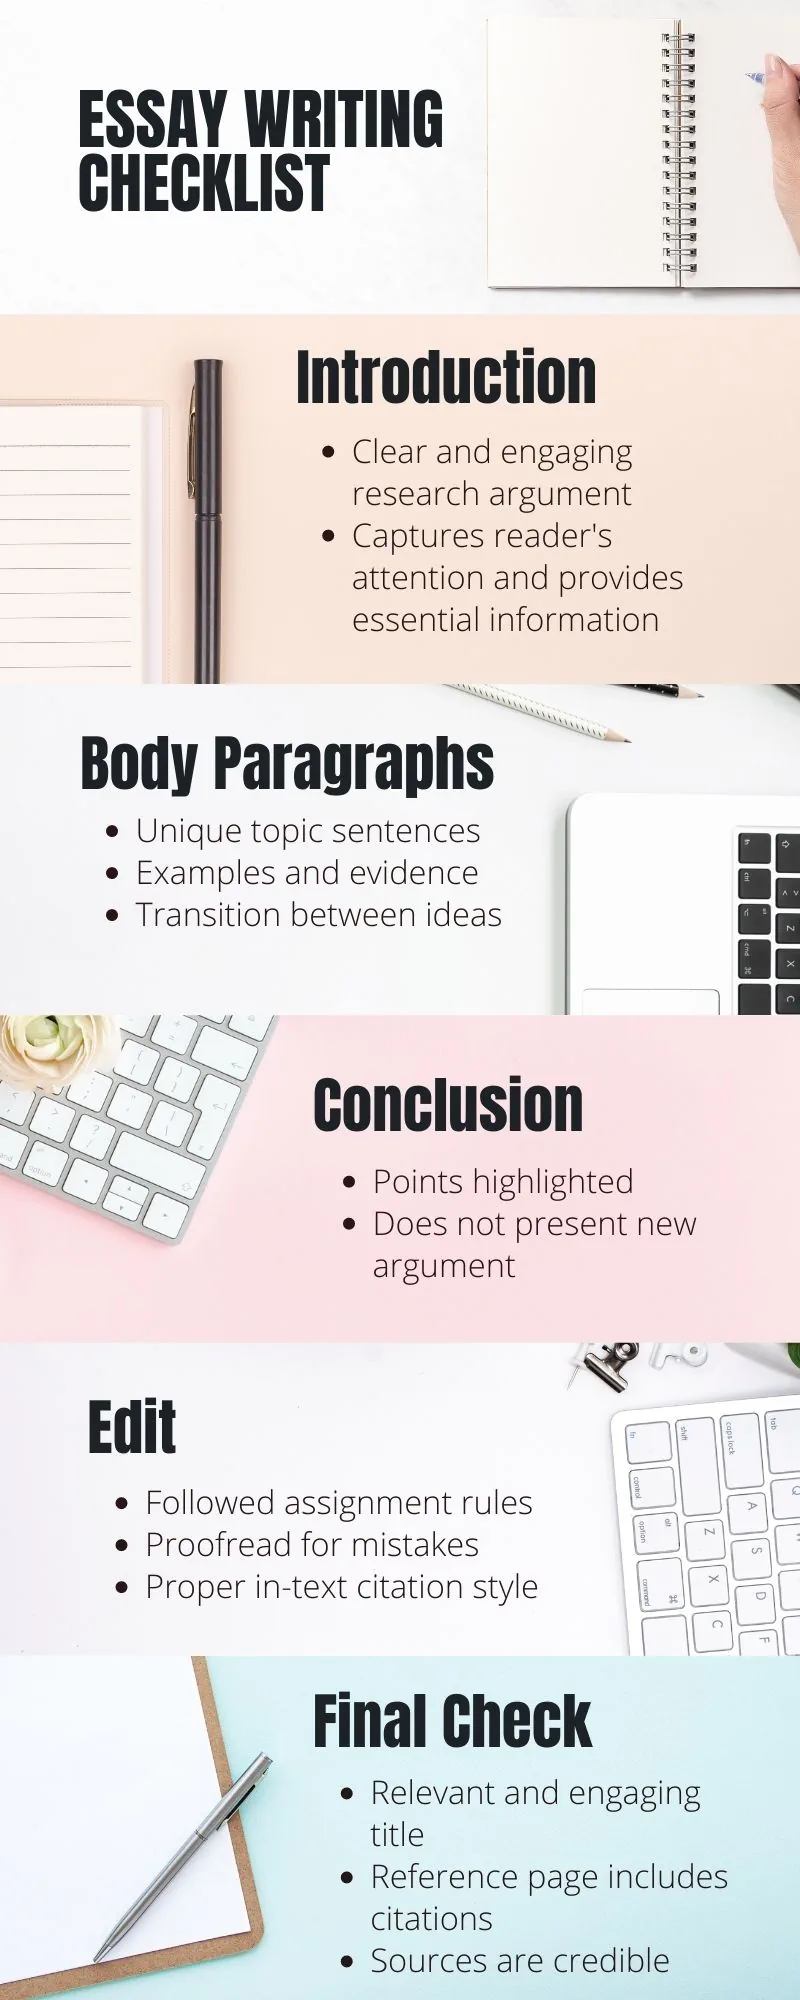 essay writing checklist infographic